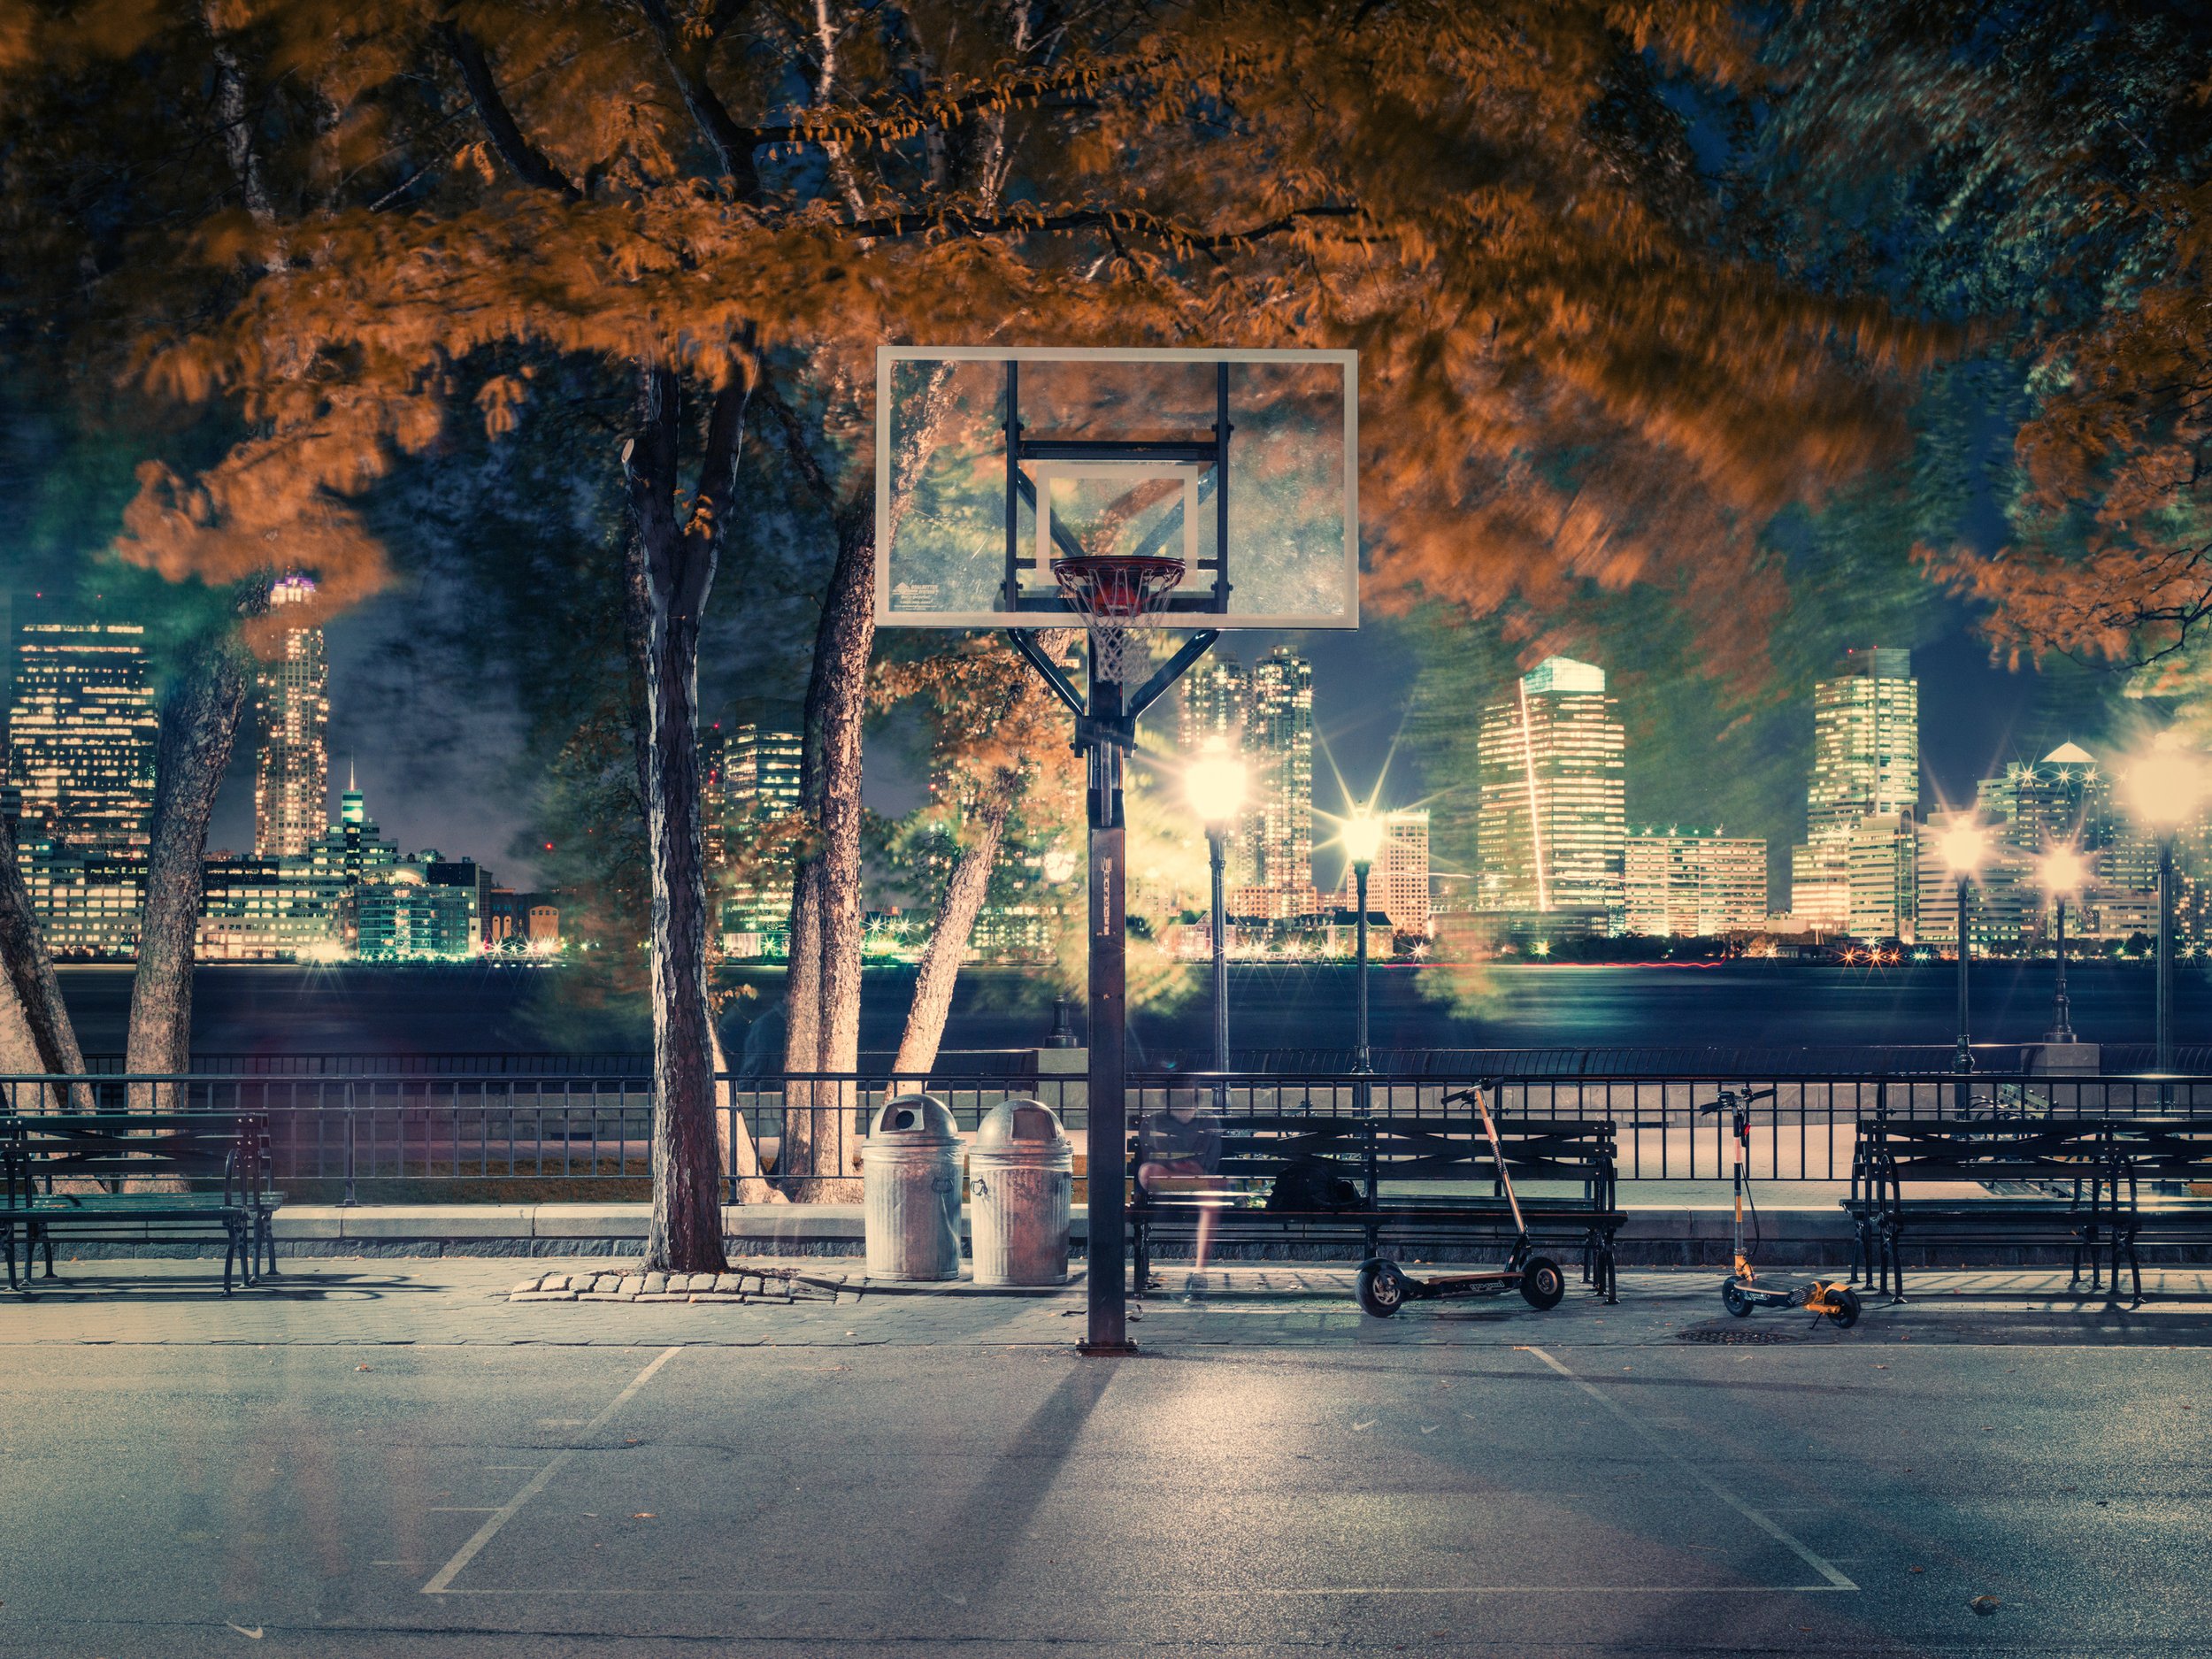 Красивый город площадка. Баскетбол на улице Лос Анджелес. Стритбол Нью Йорк. Баскетбольная площадка в Нью Йорке. Нью Йорк 90х баскетбольные площадки улица.